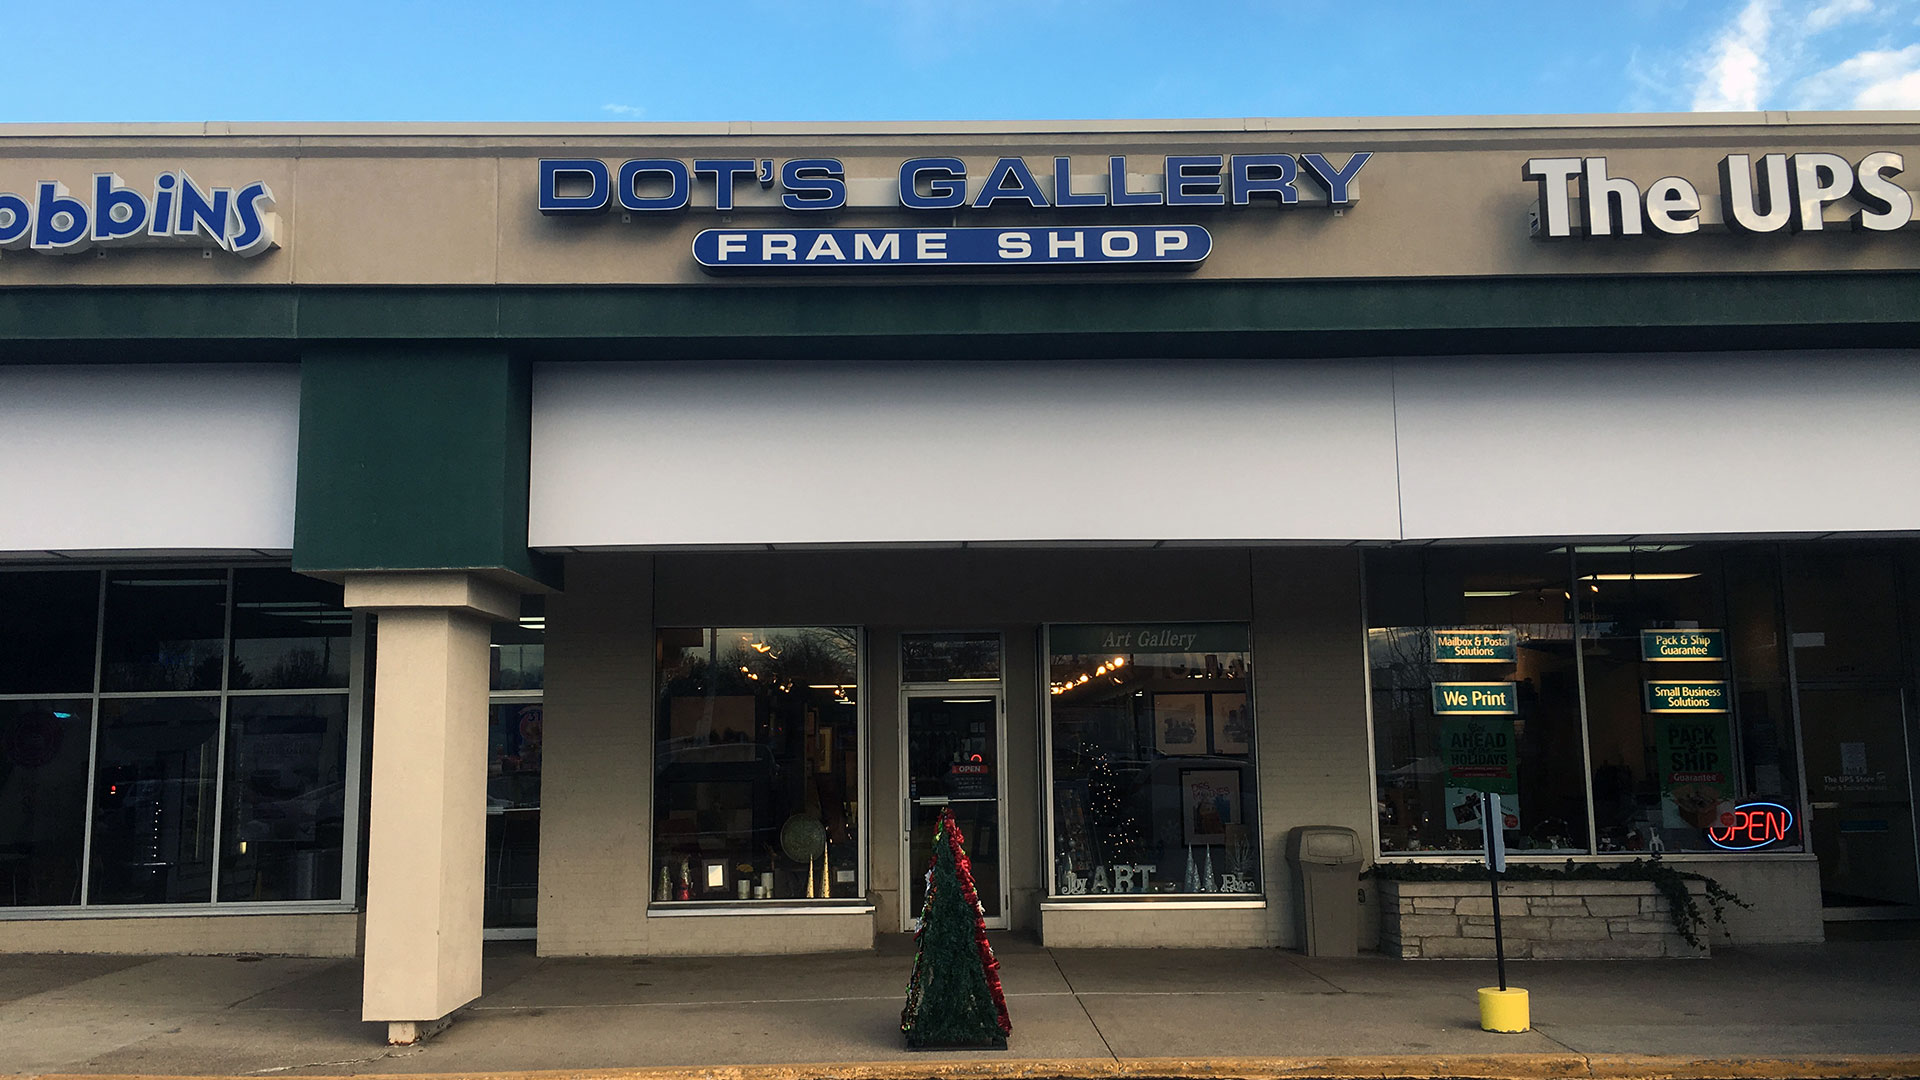 Dot's Gallery Frame Shop